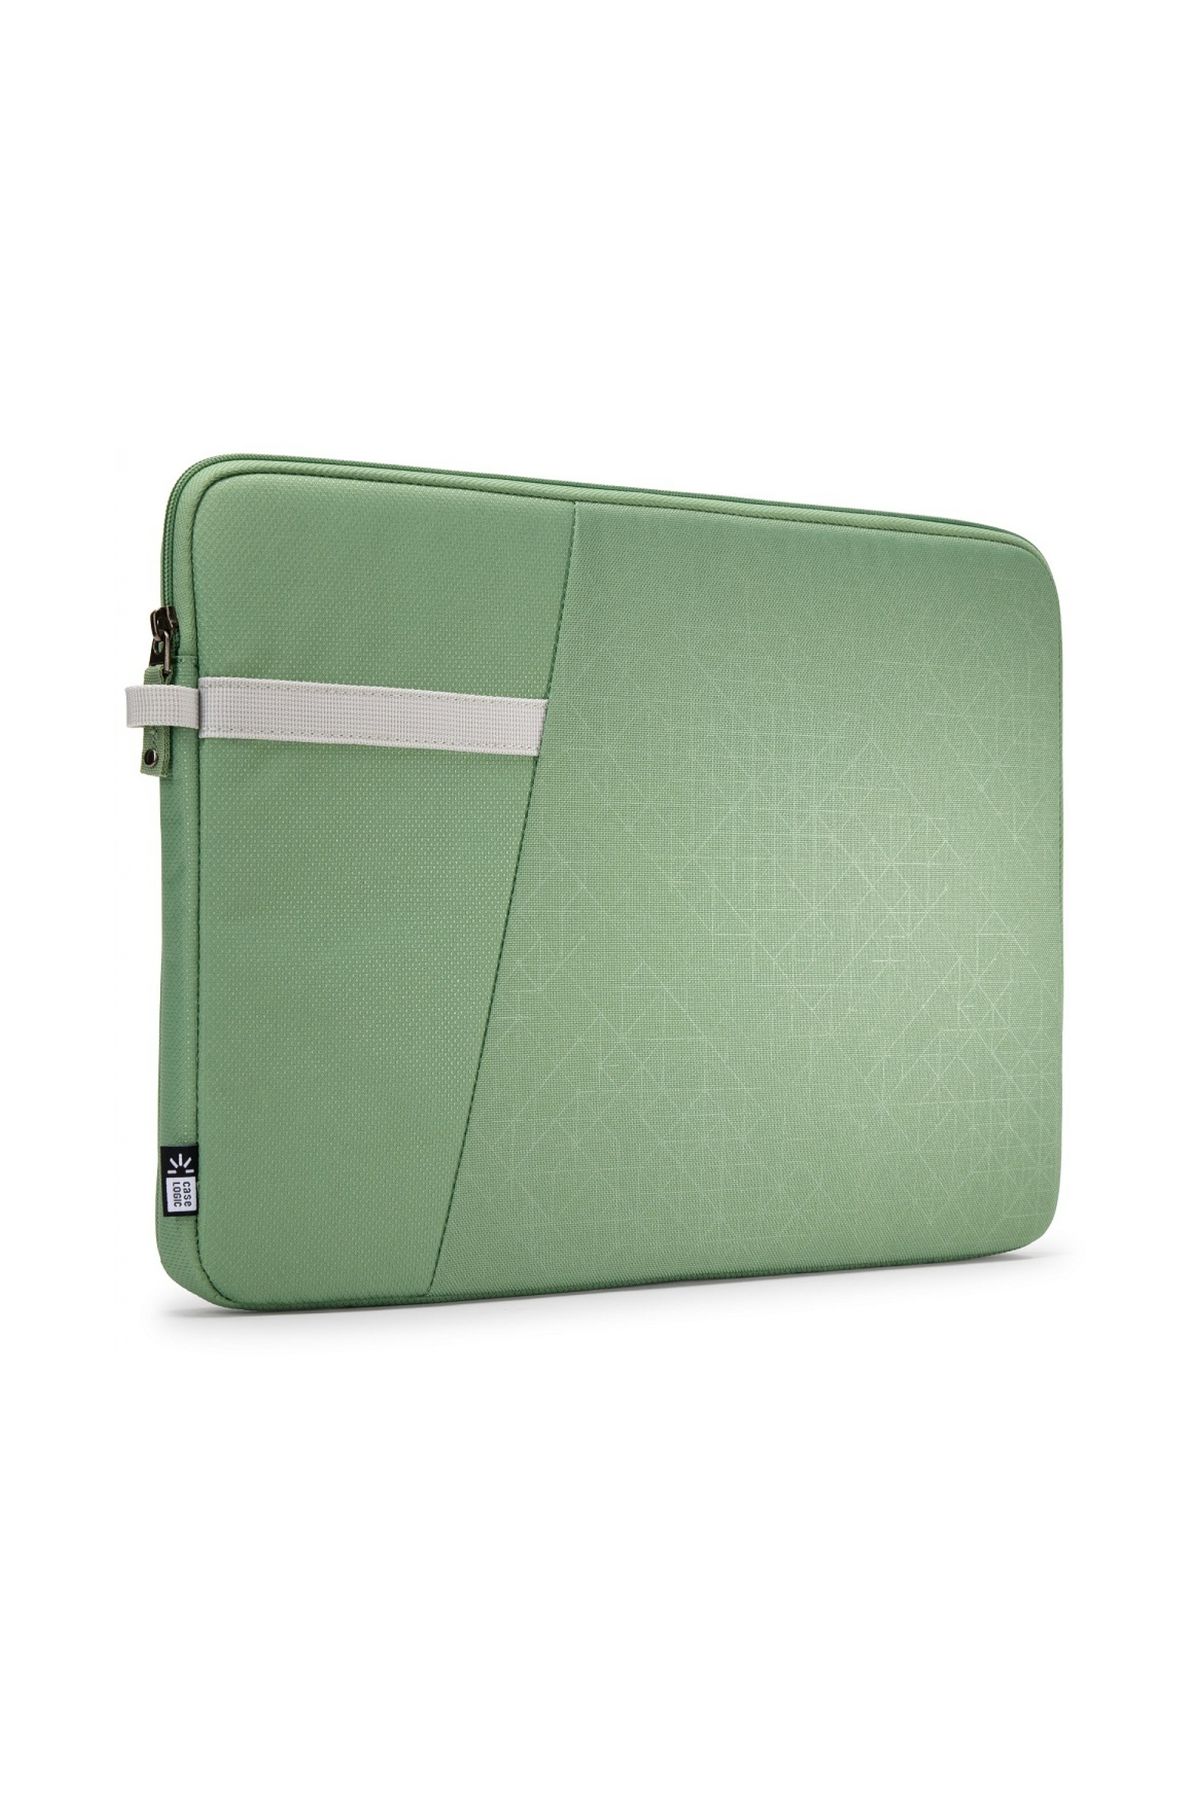 Case Logic Case Logic Ibira Notebook Kılıfı 14 inç - Islay Green